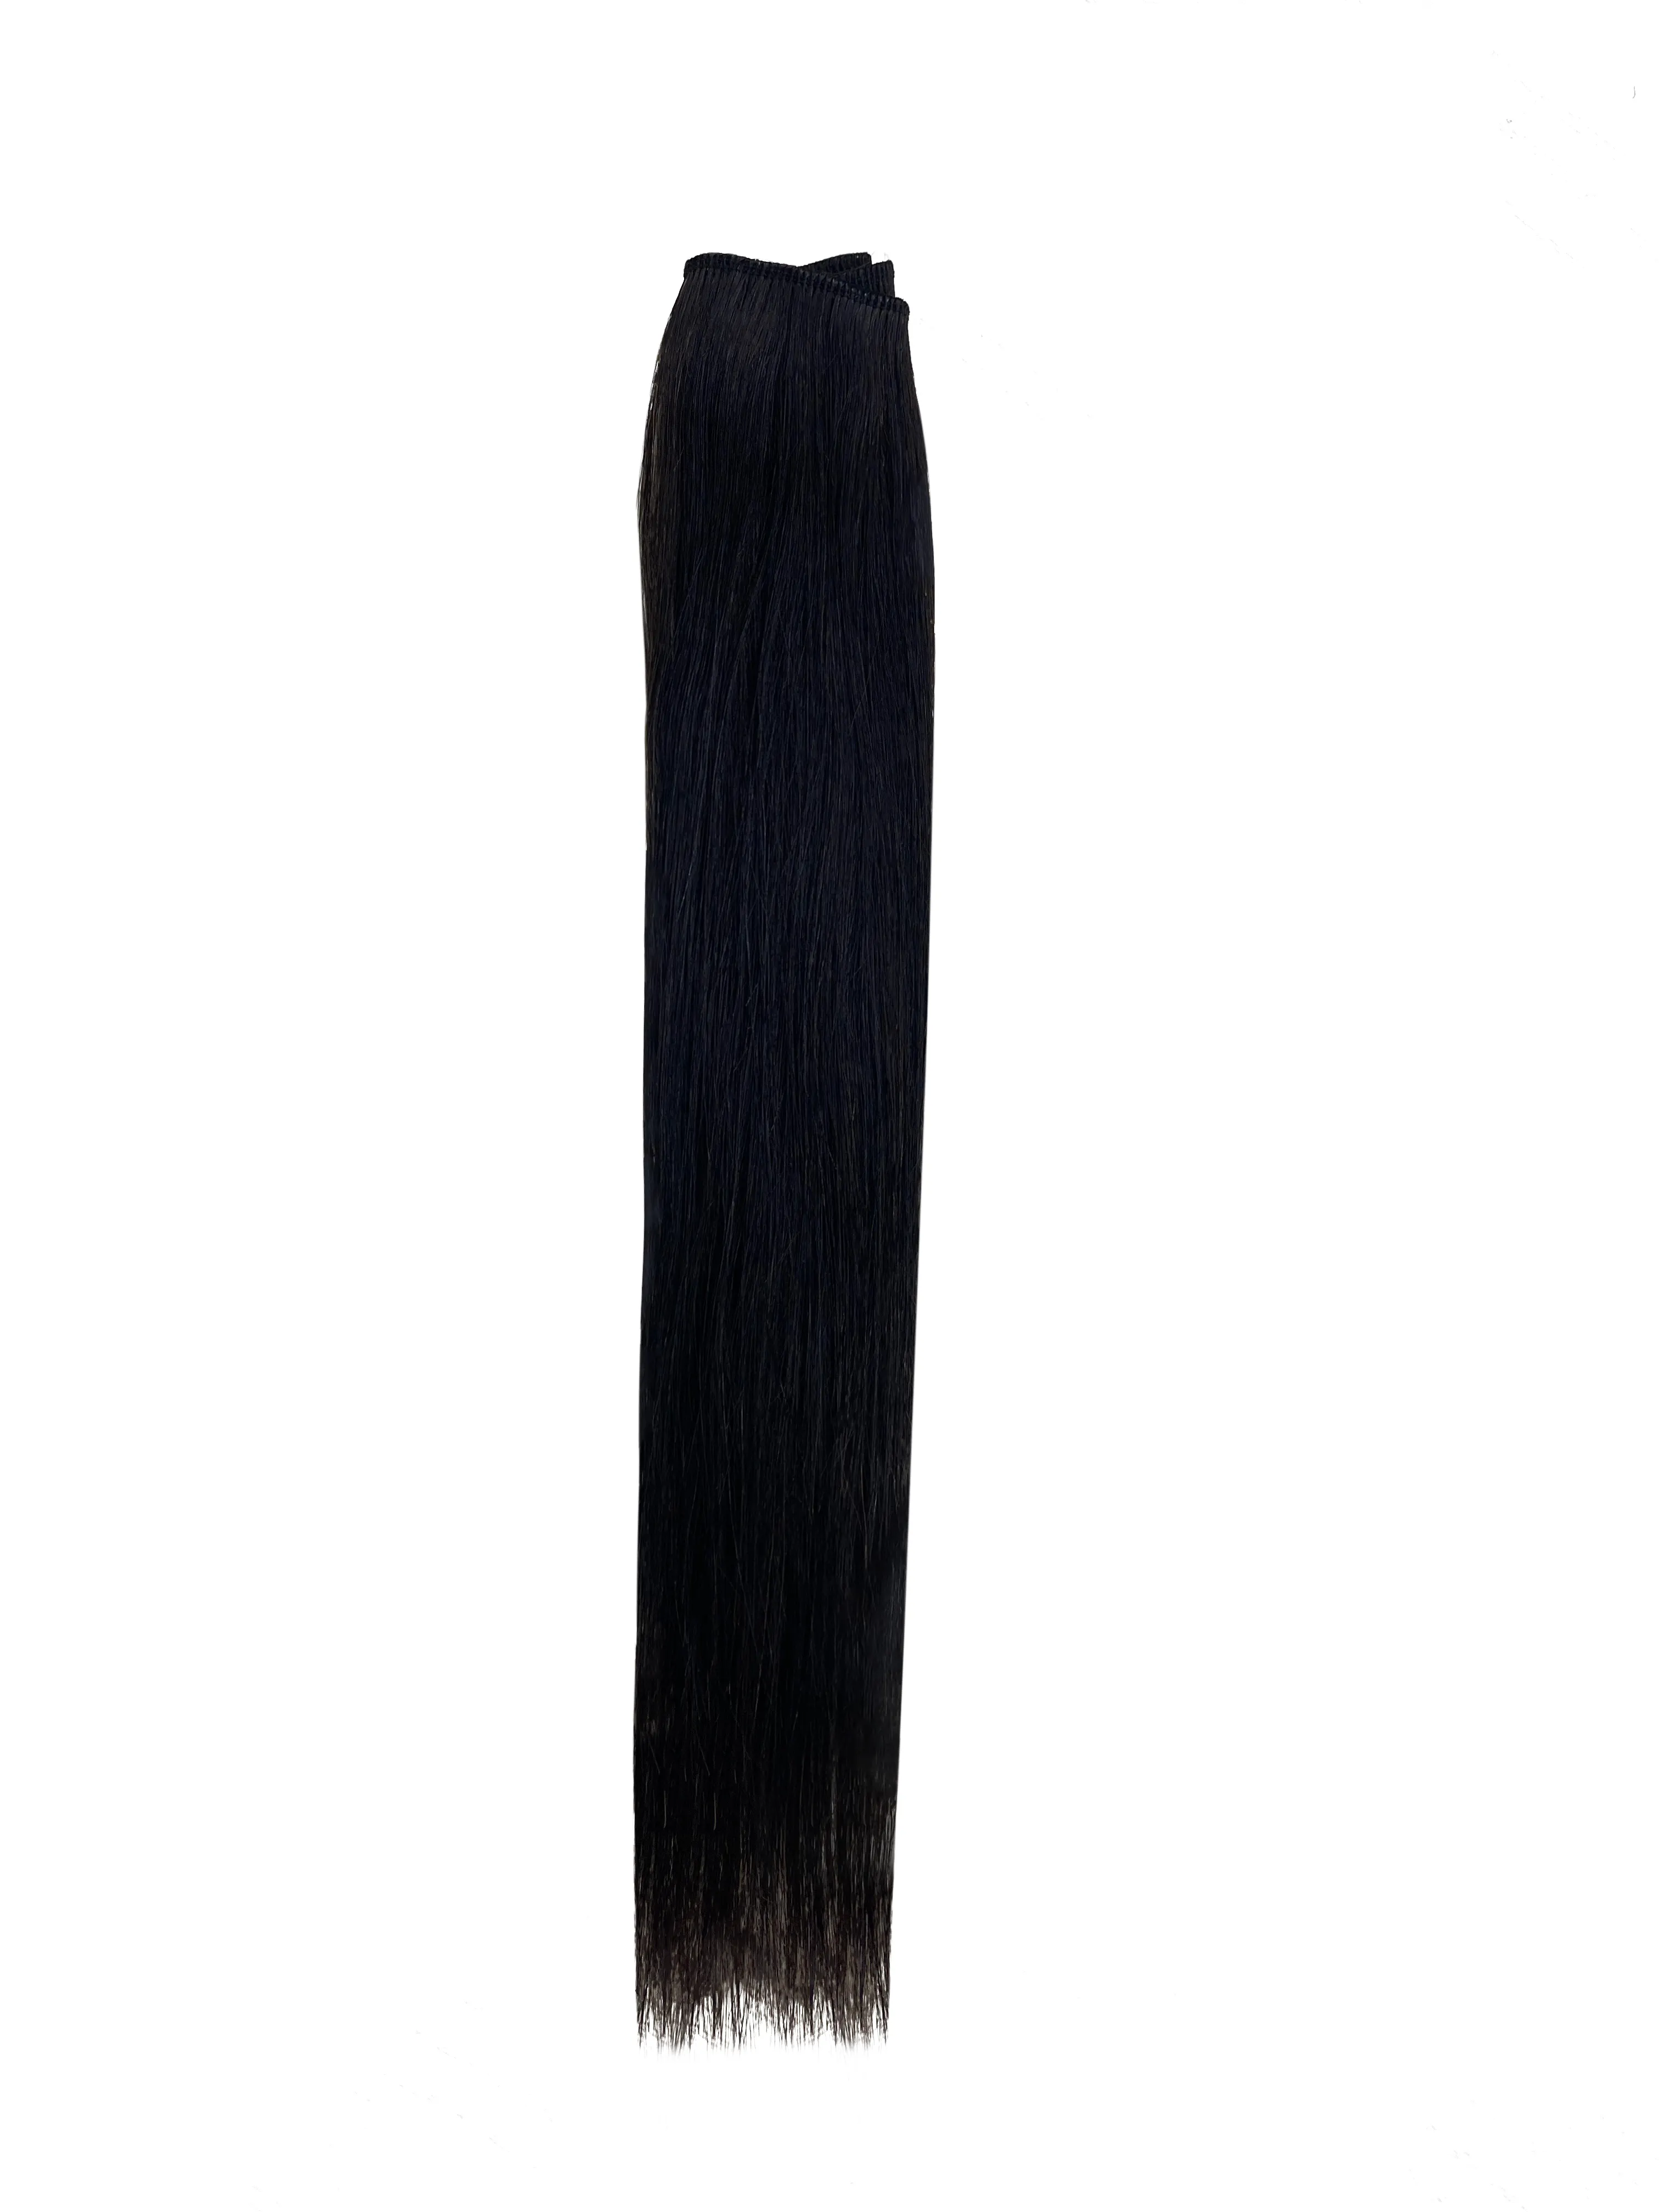 Proveedor de cabello a granel al por mayor de FH, cabello humano crudo sin procesar, cabello humano trenzado a granel de onda profunda